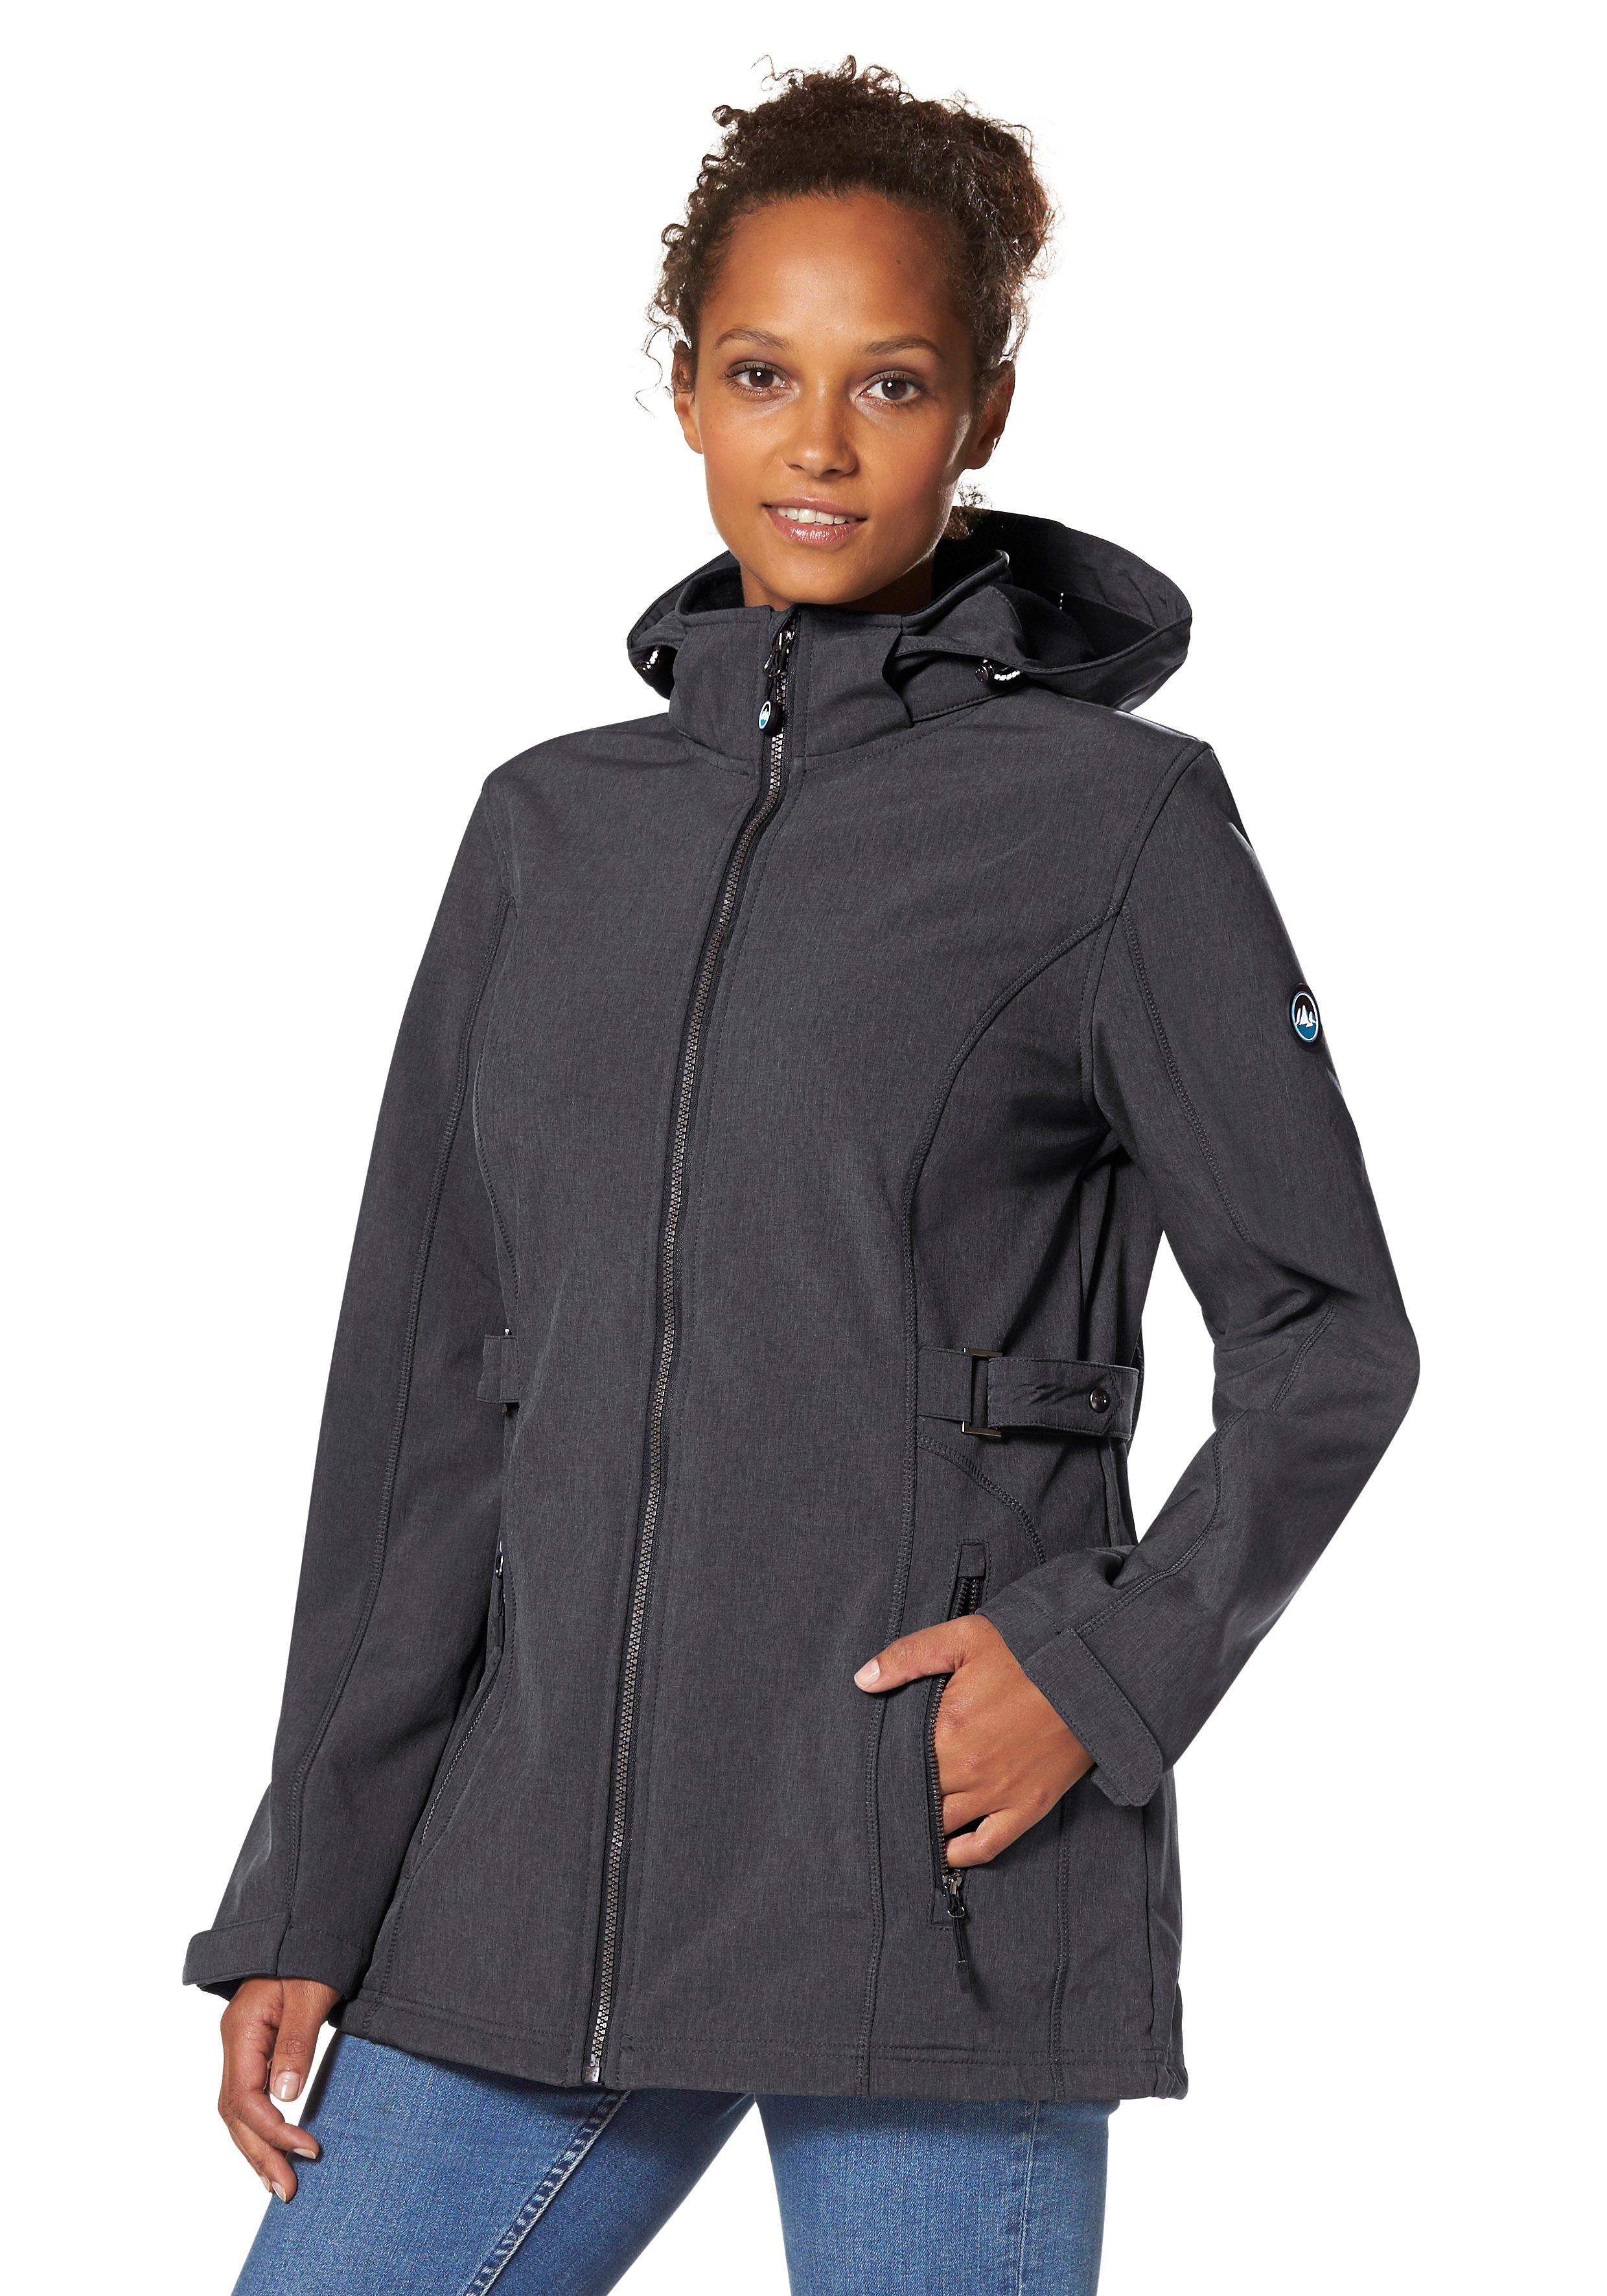 Damen Jacken & Mäntel große Größen › Größe 54 | sheego ♥ Plus Size Mode | Regenjacken